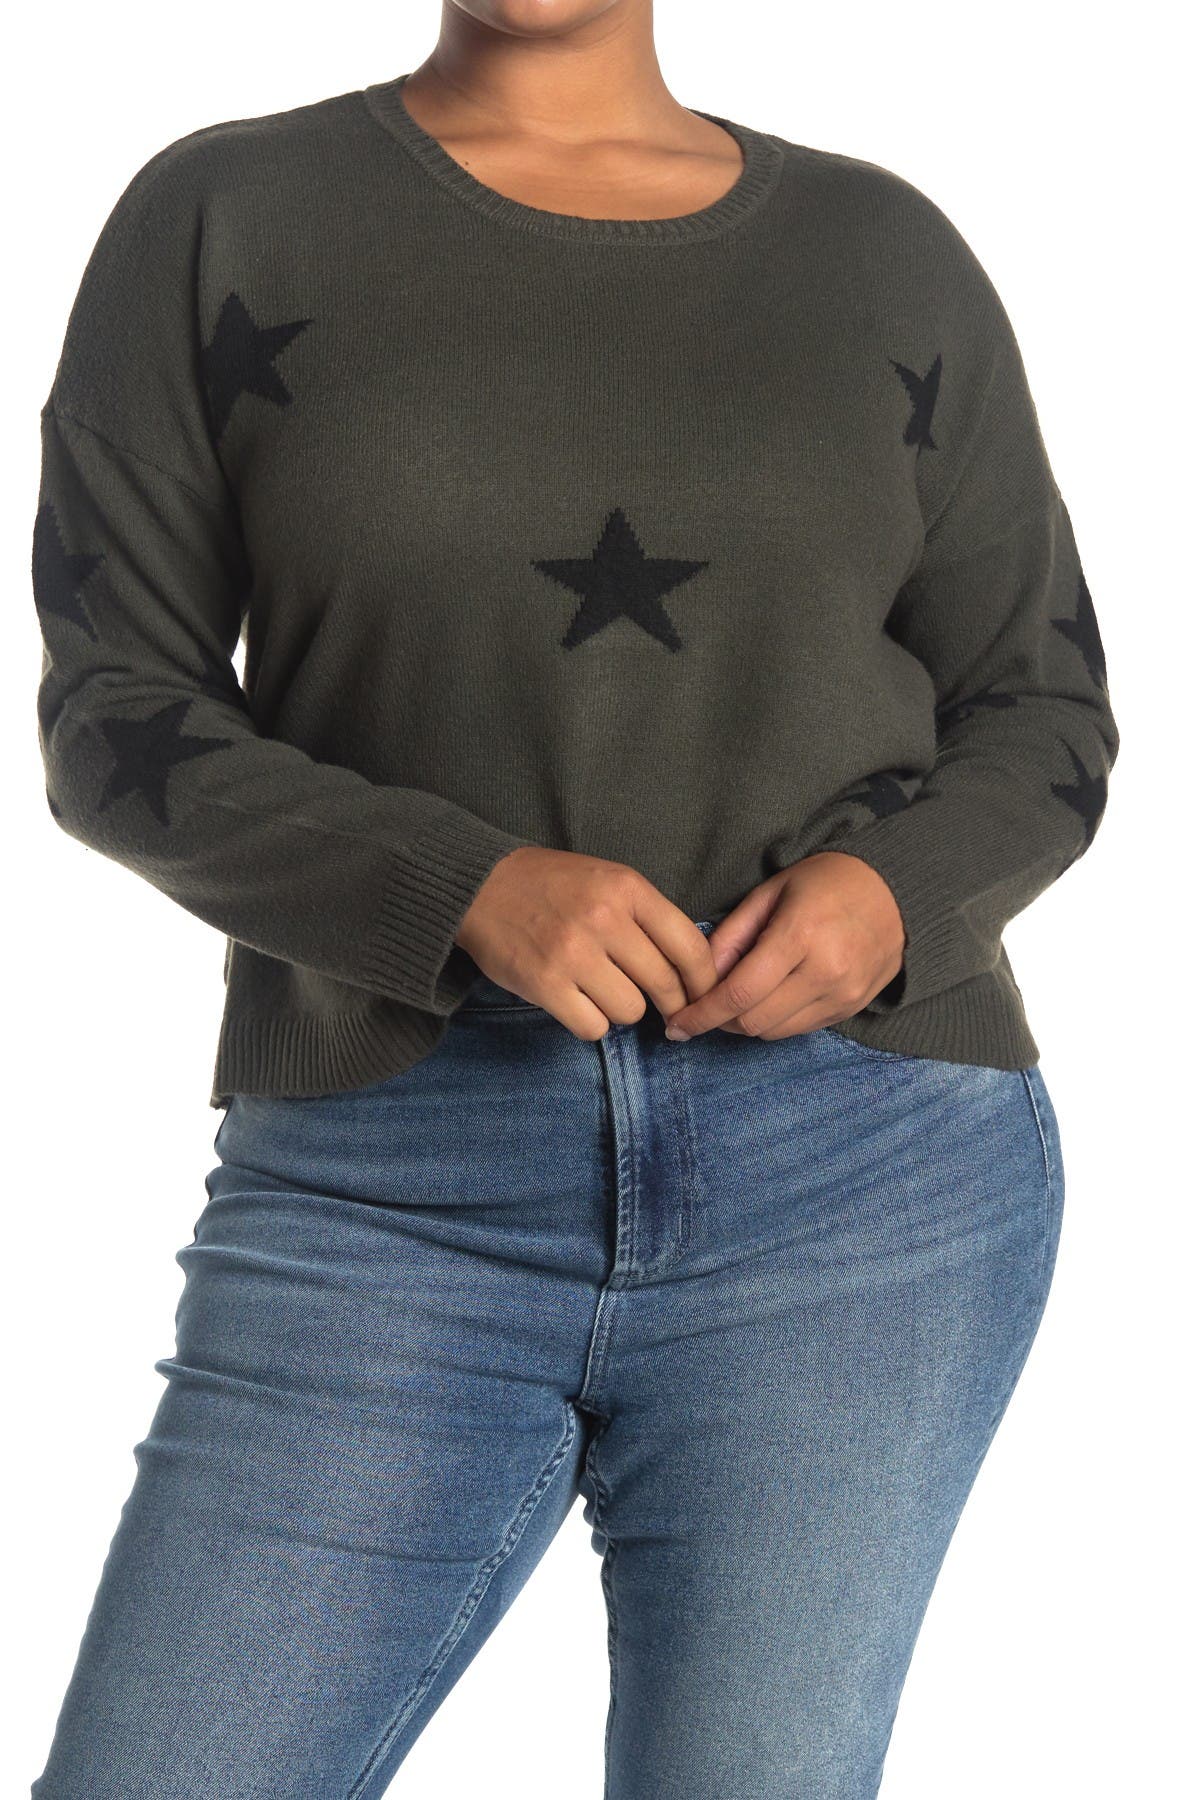 plus size star sweater